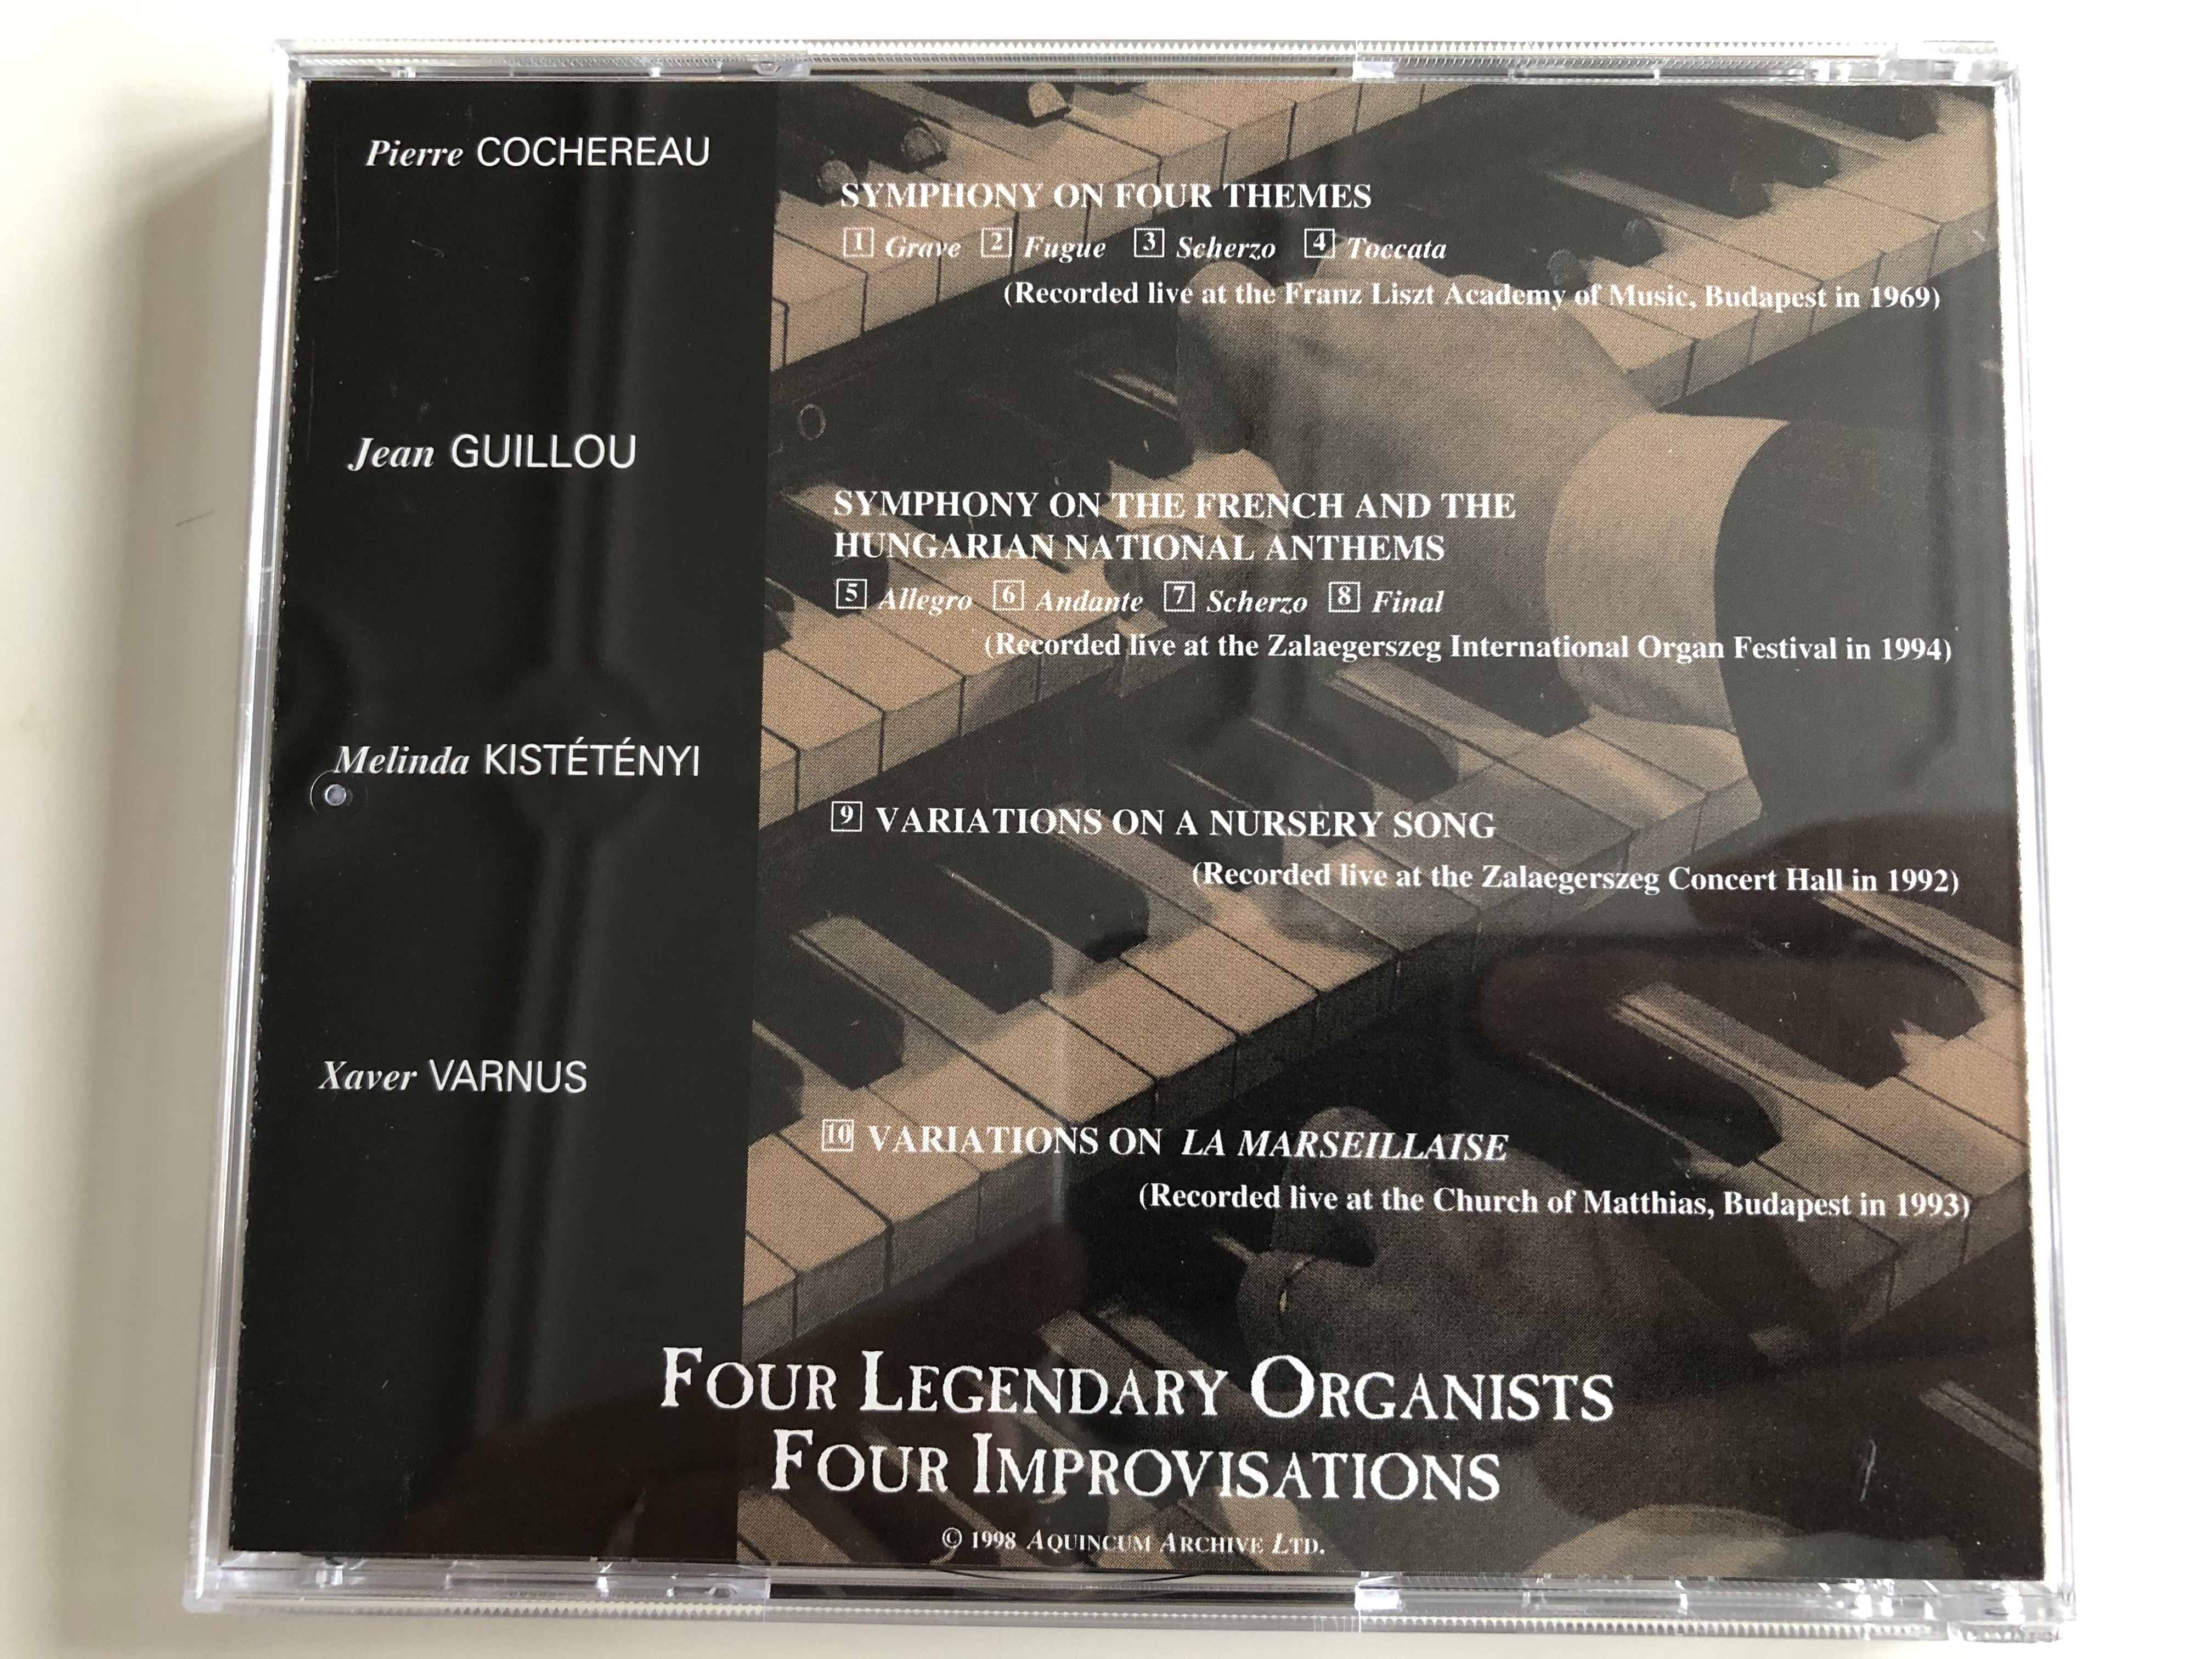 four-legendary-organists-four-improvisations-the-great-organs-of-hungary-aquincum-archive-ltd.-audio-cd-1998-acd-1442-8-.jpg